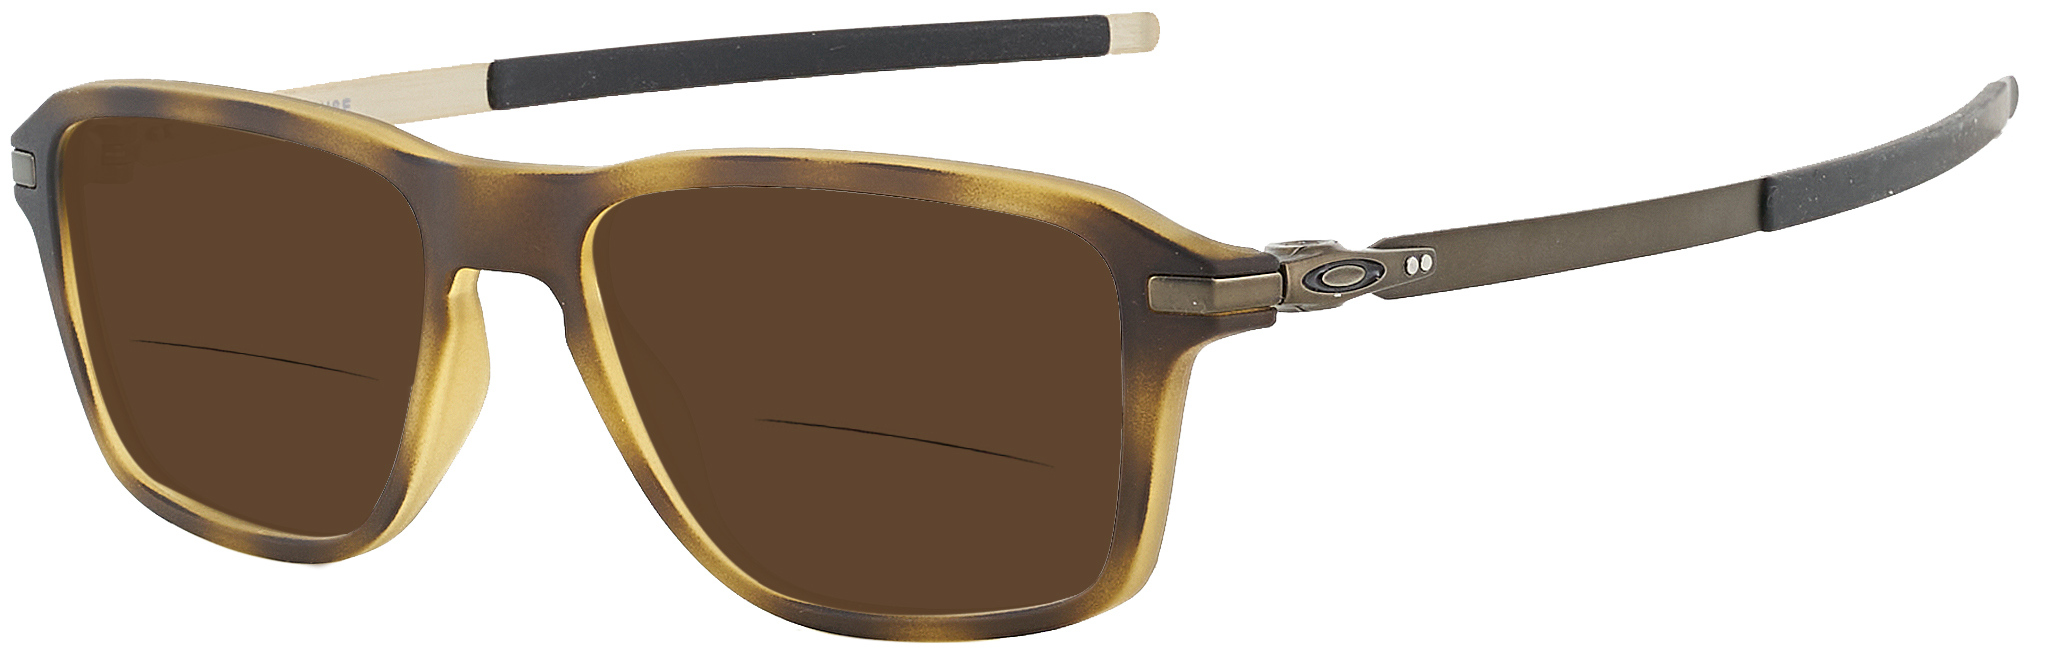 Oakley 8166 Bifocal Reading Sunglasses 